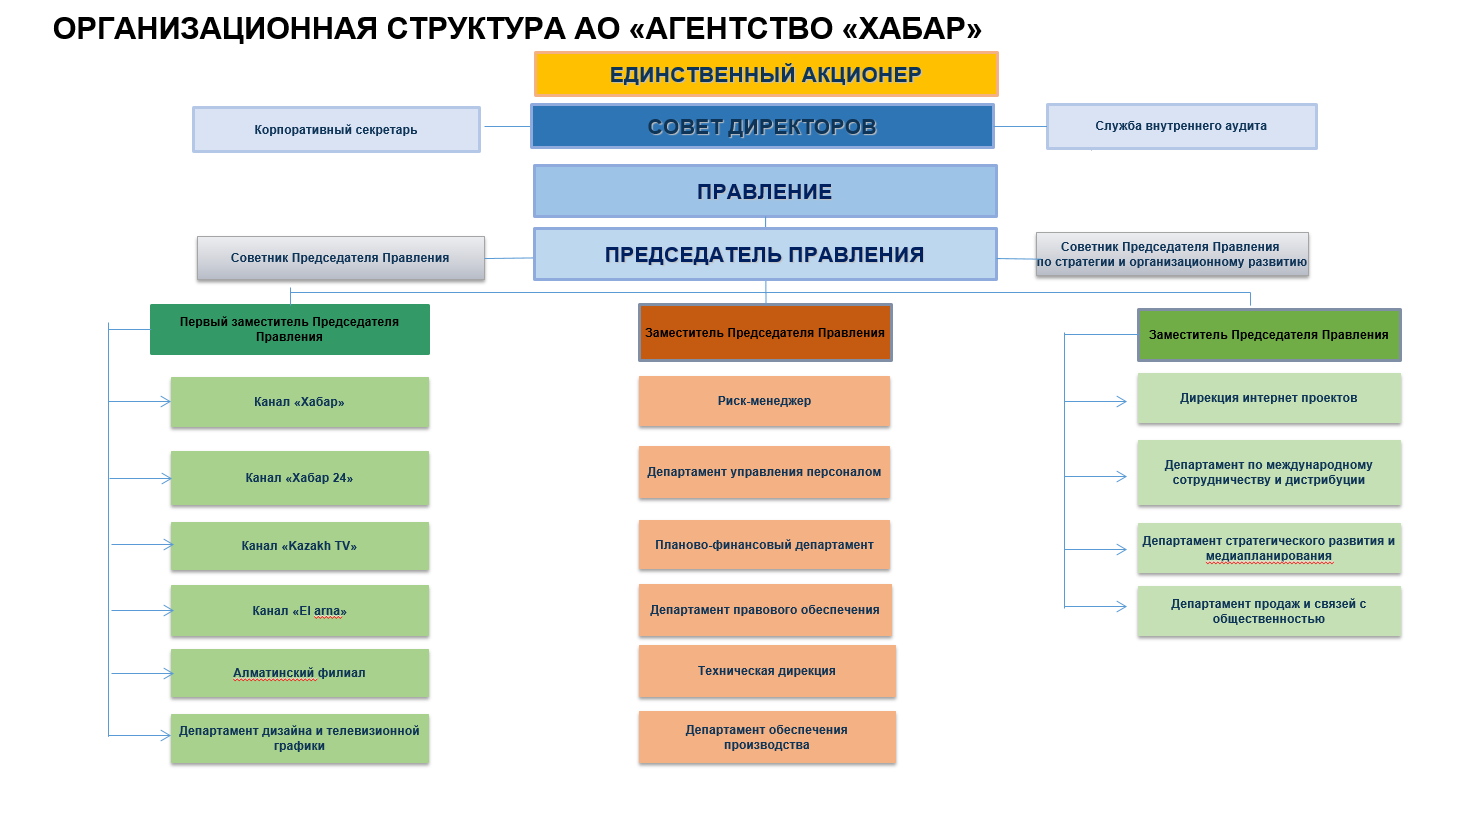 Организационная структура Агентства Хабар